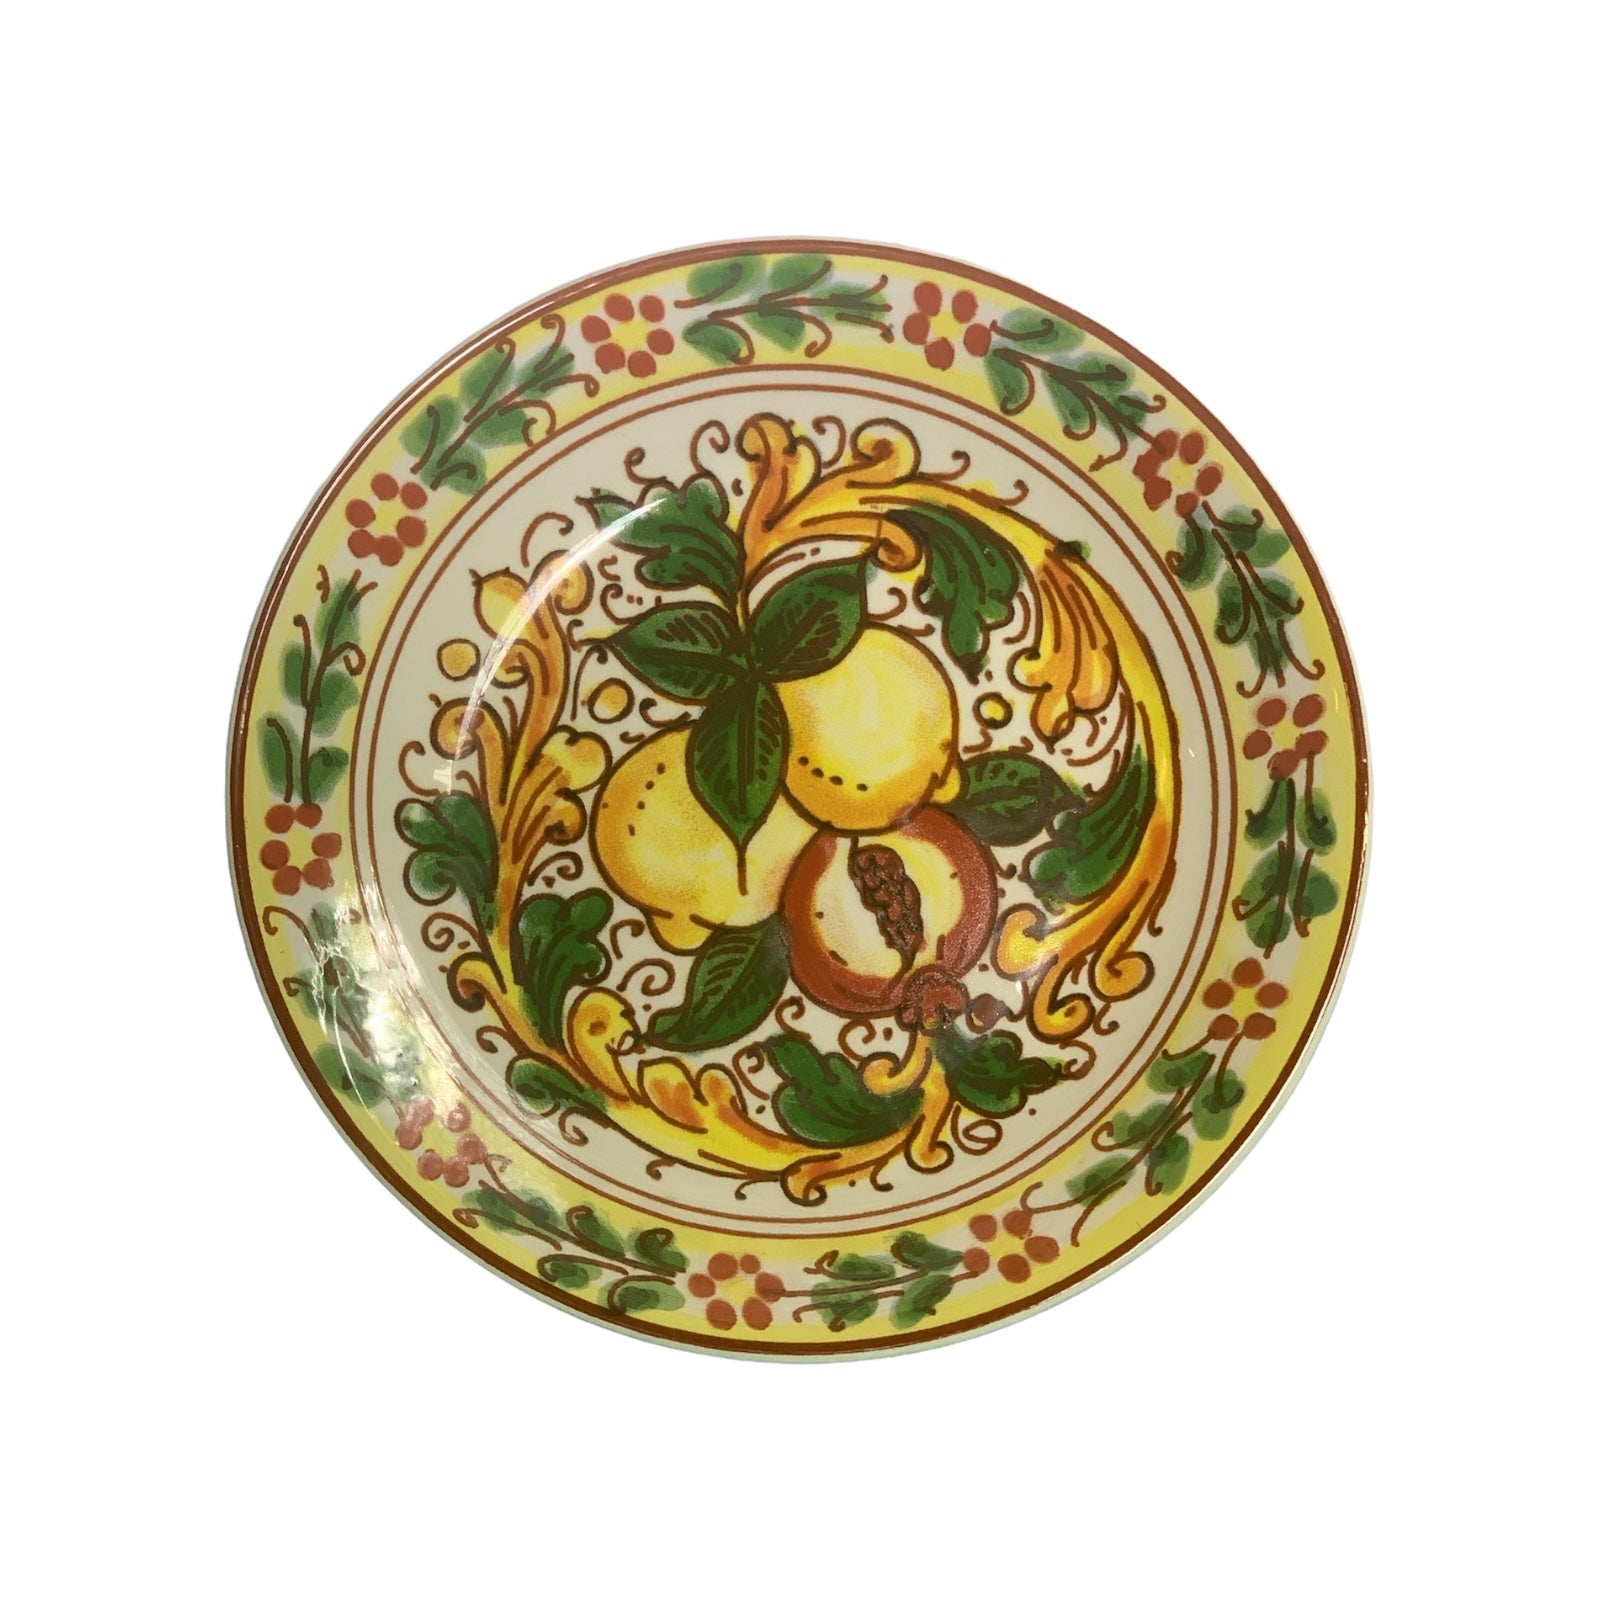 CeramicheItalia Deep Dinner Plate 
Made in Italy